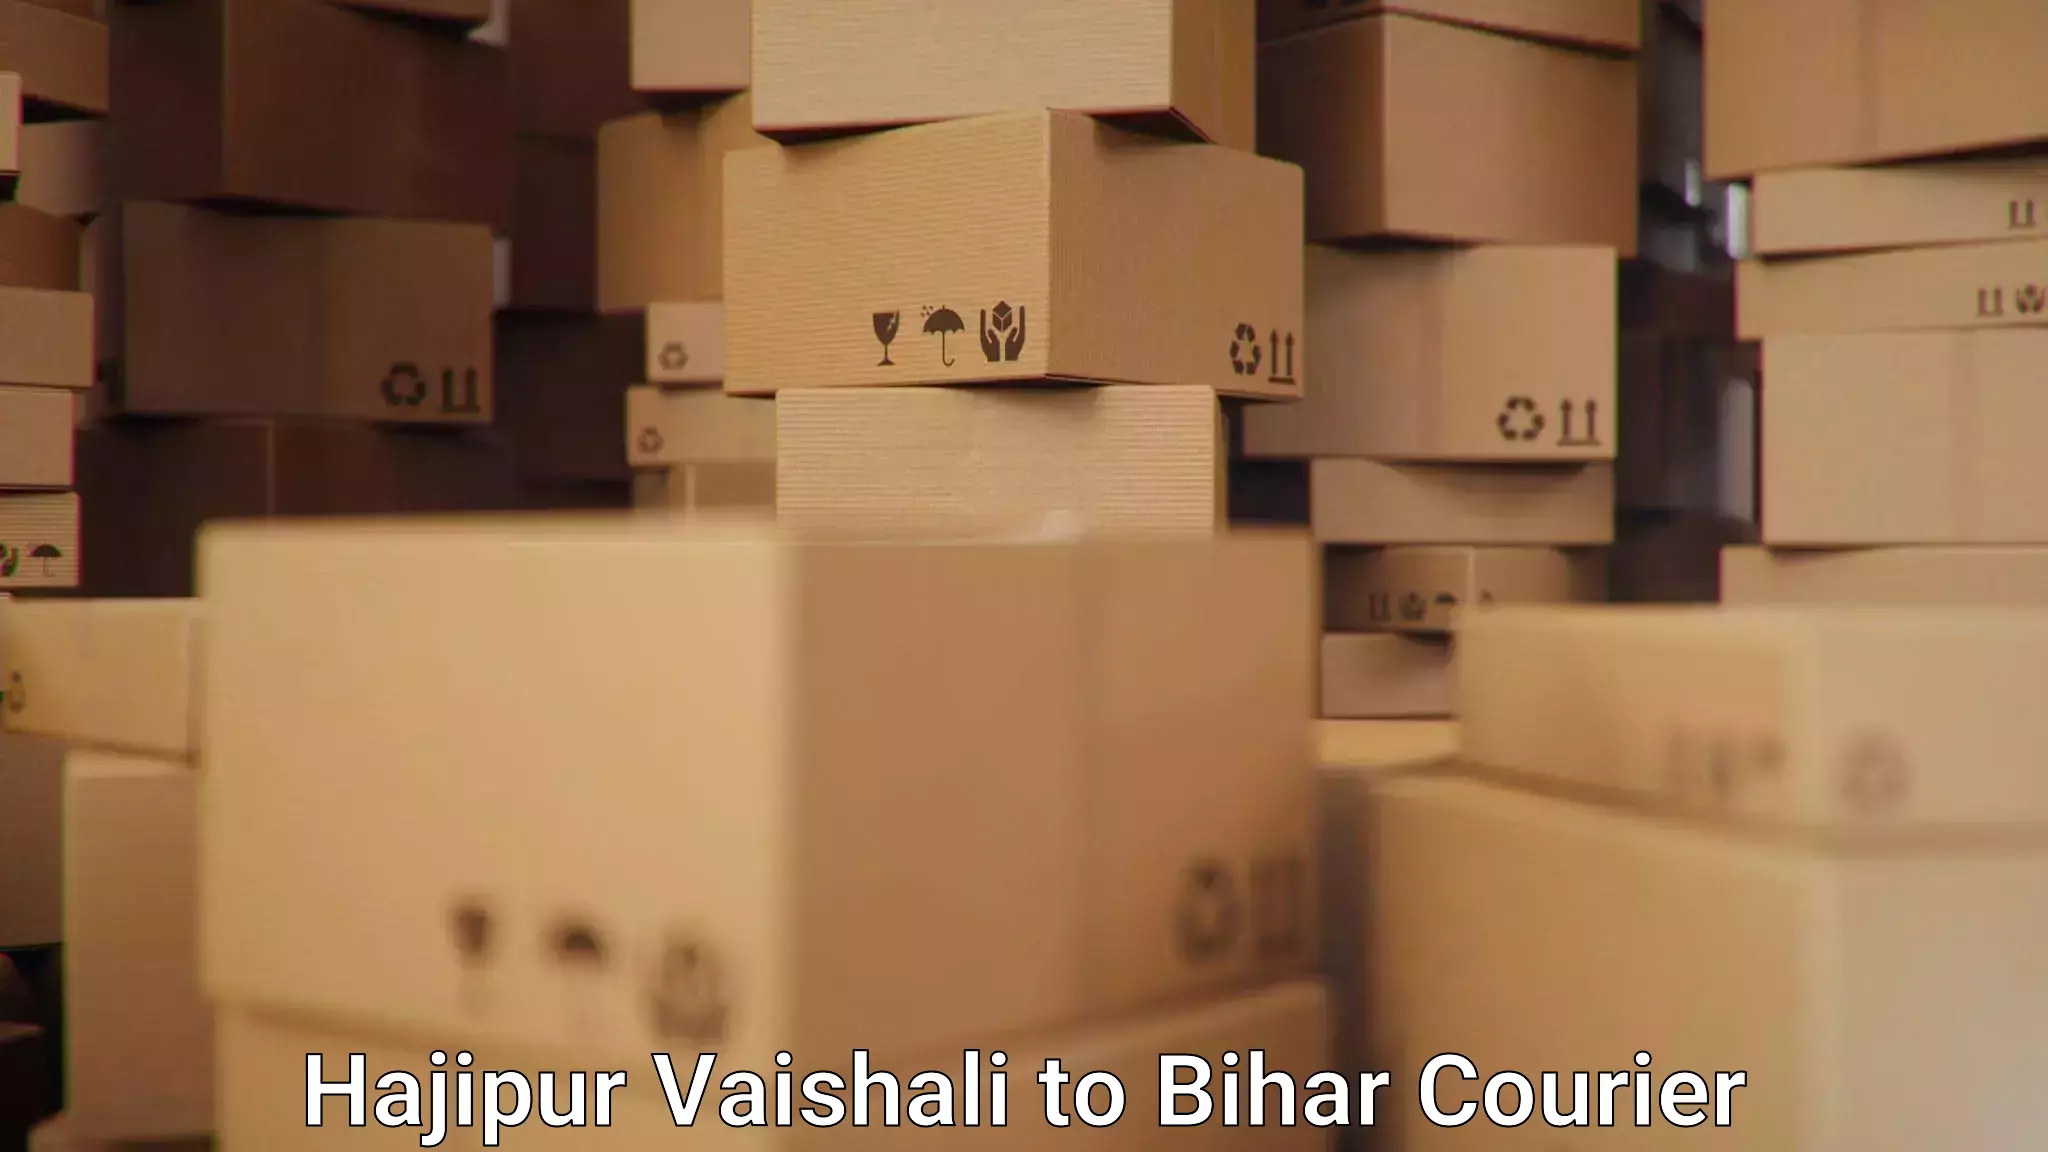 Professional courier handling Hajipur Vaishali to Gauripur